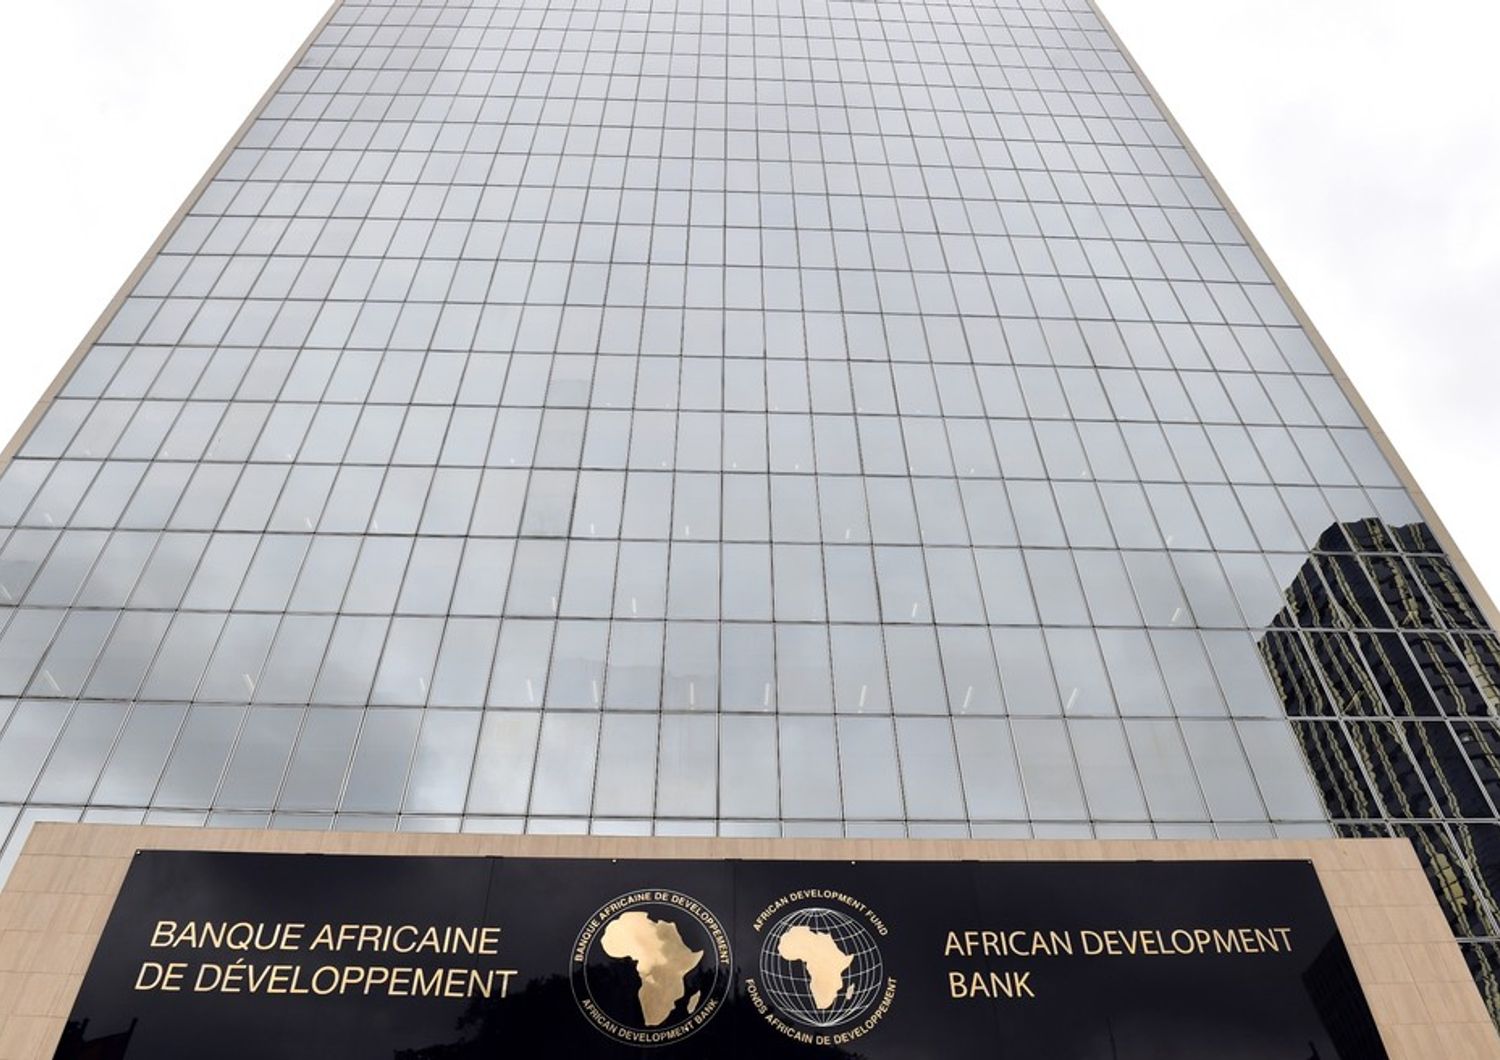 AFDB - African Development Bank - Banca africana per lo sviluppo (Afp)&nbsp;